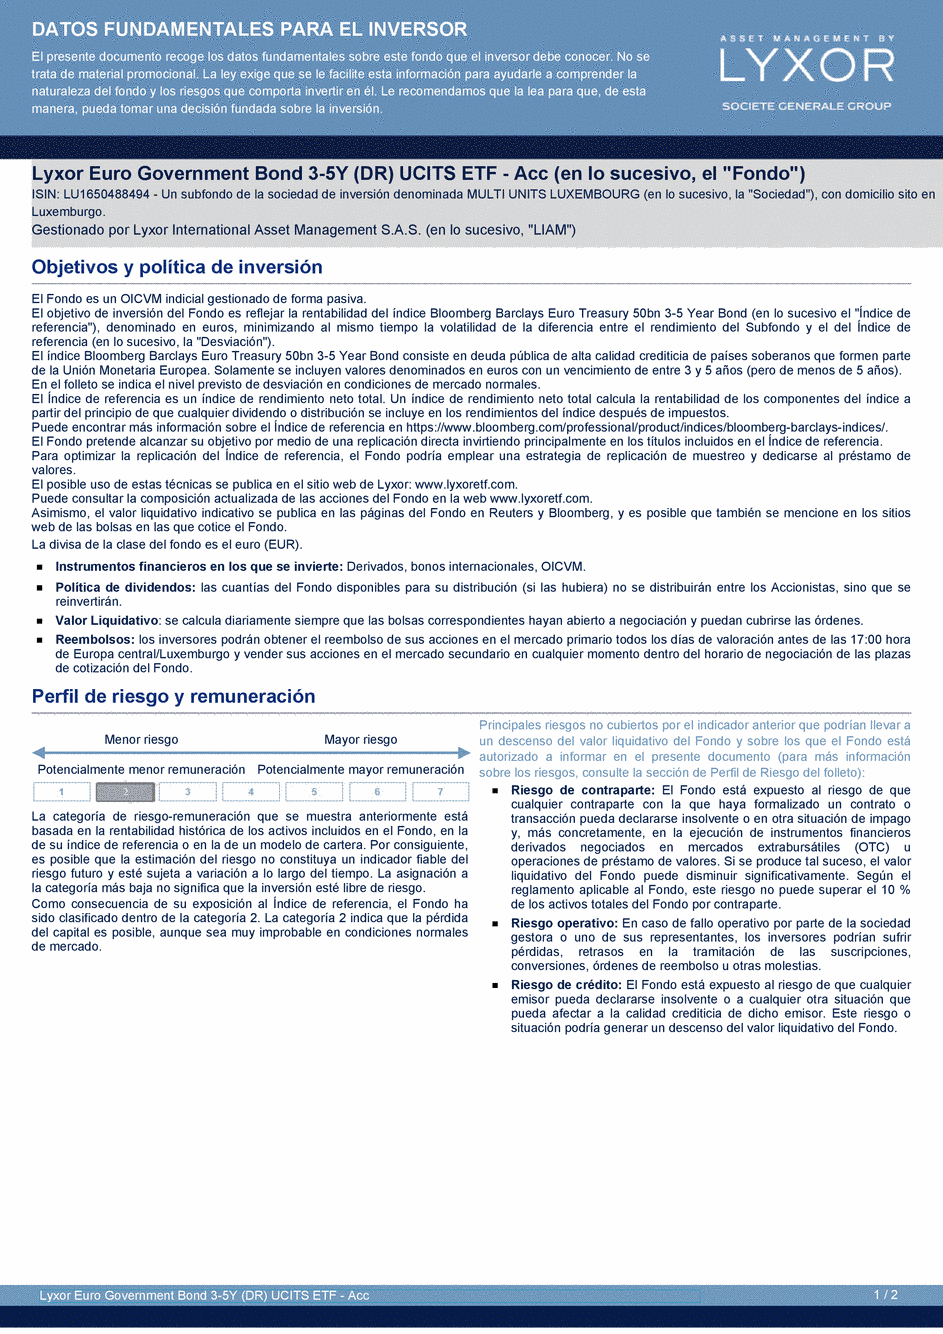 DICI Lyxor Euro Government Bond 3-5Y (DR) UCITS ETF - Acc - 19/02/2021 - Espagnol